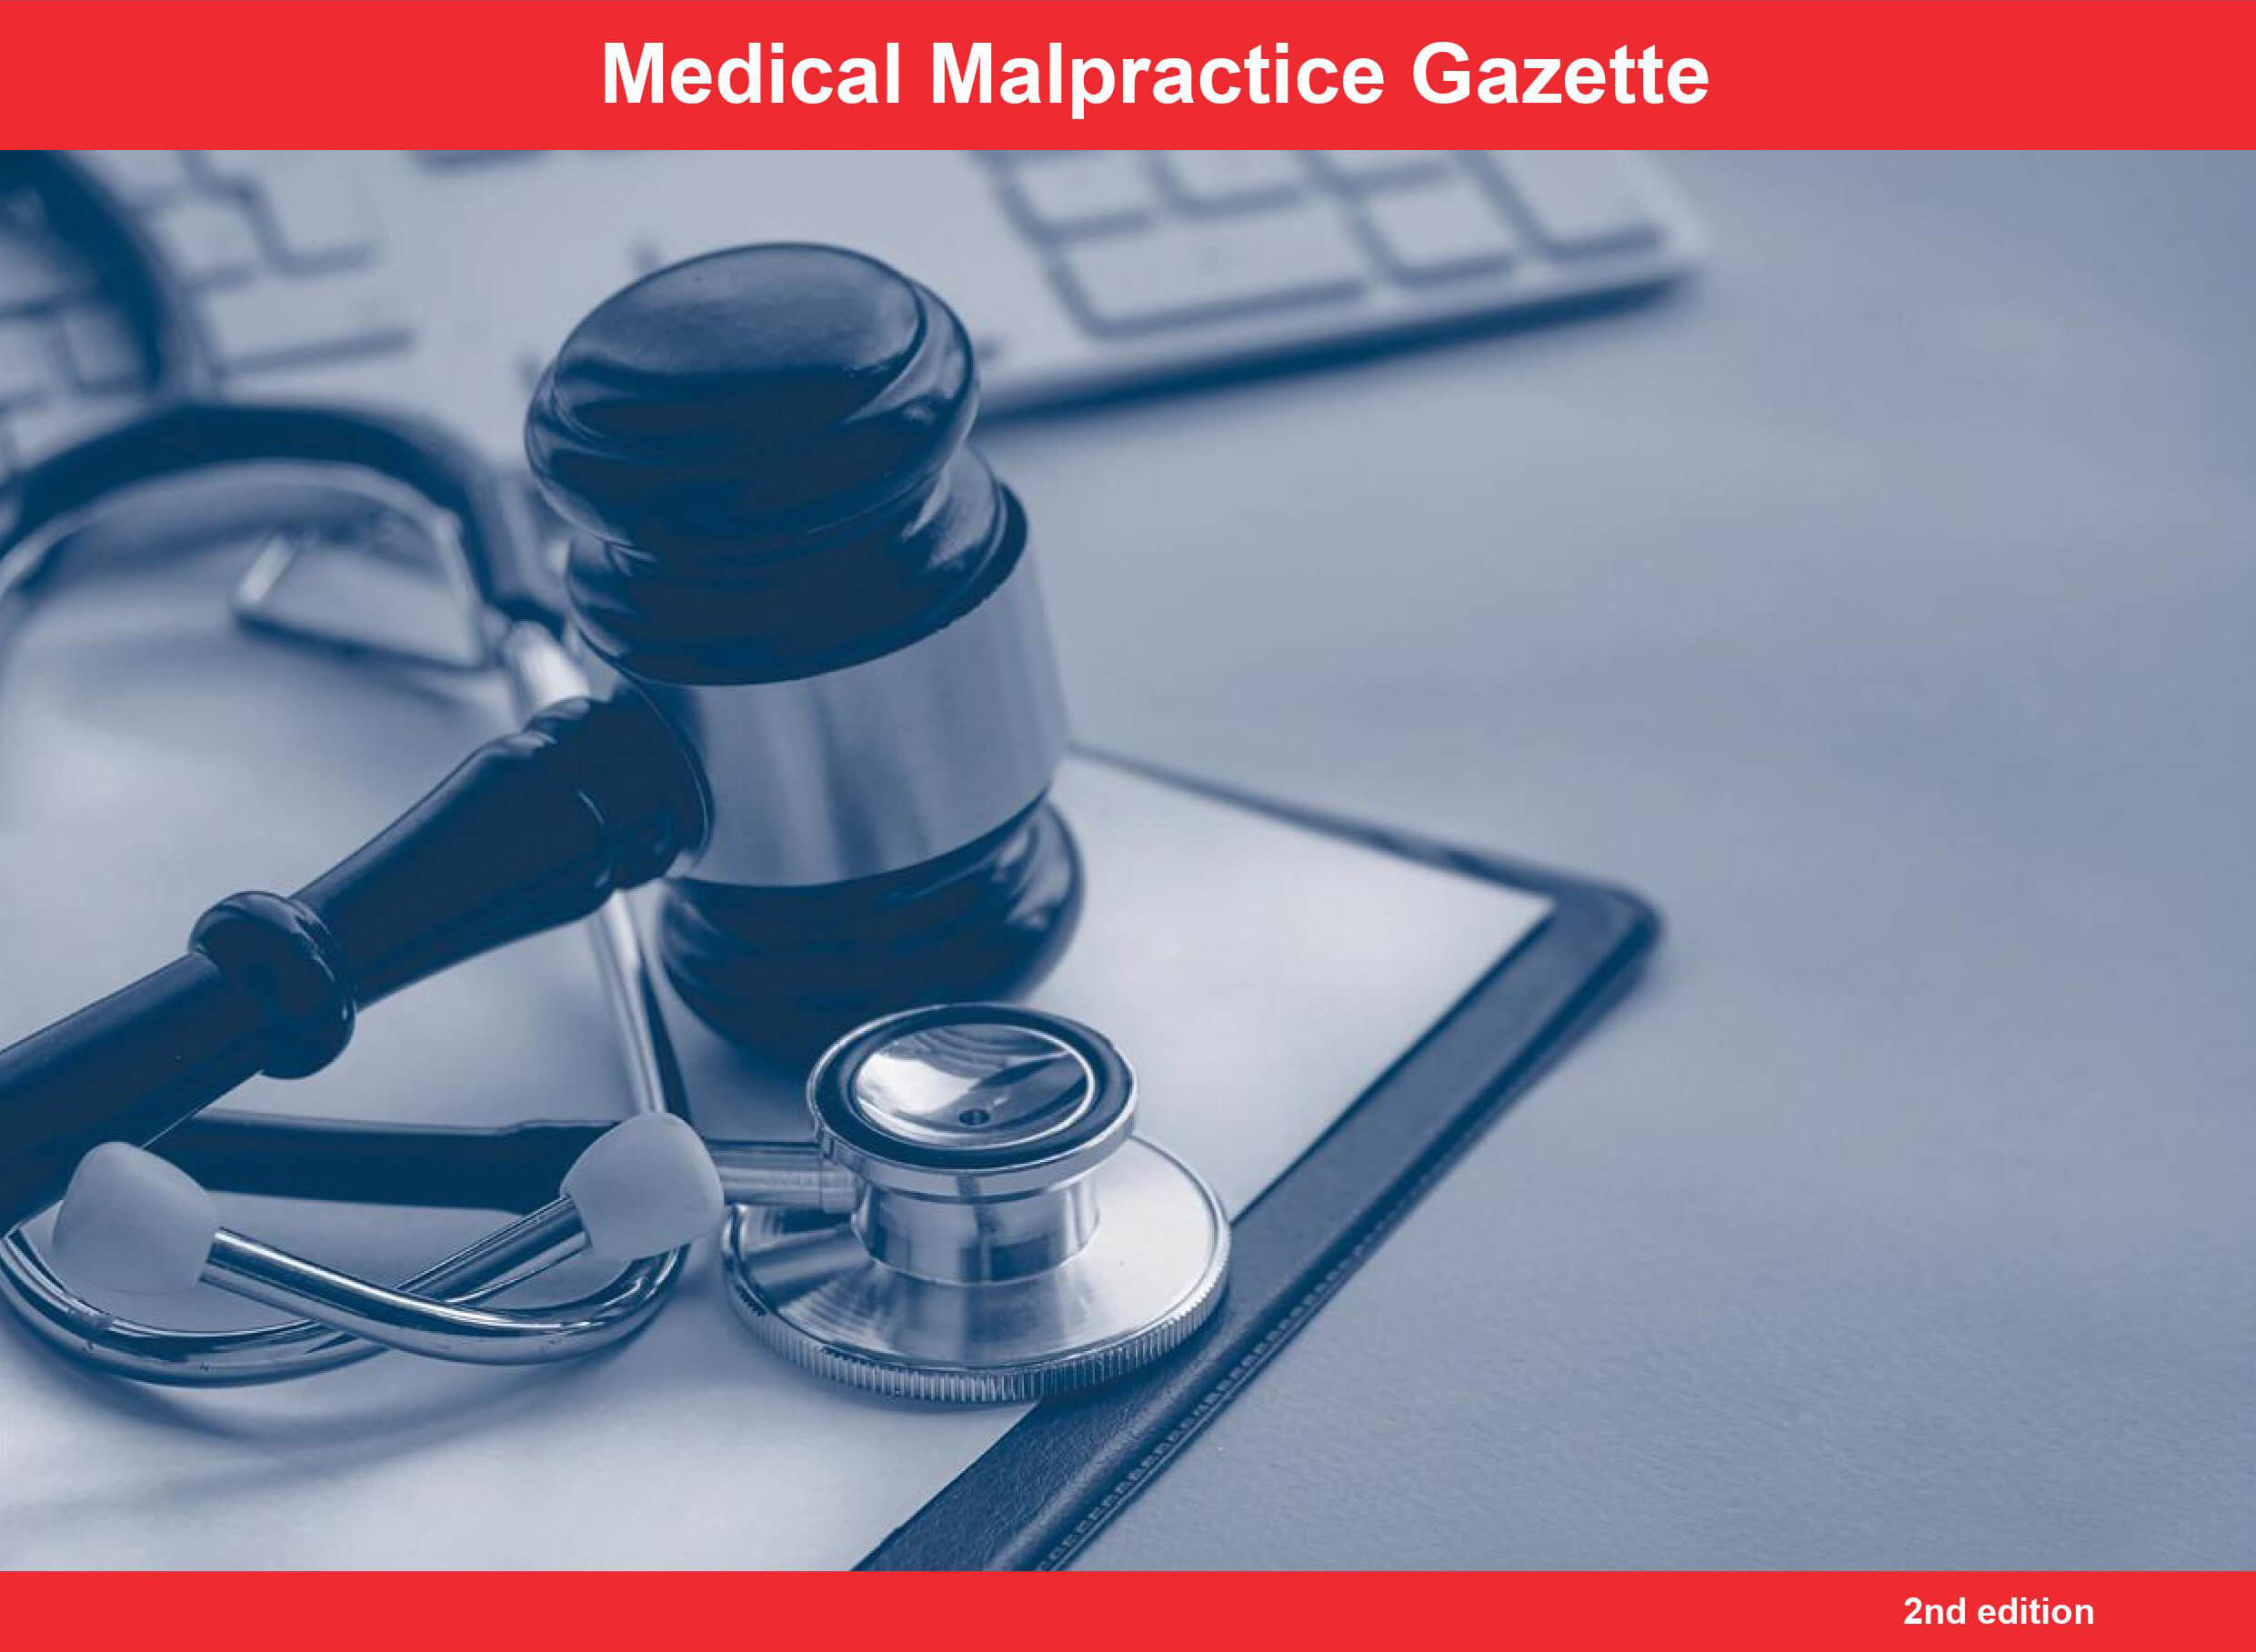 Medical Malpractice Gazette (2nd edition)